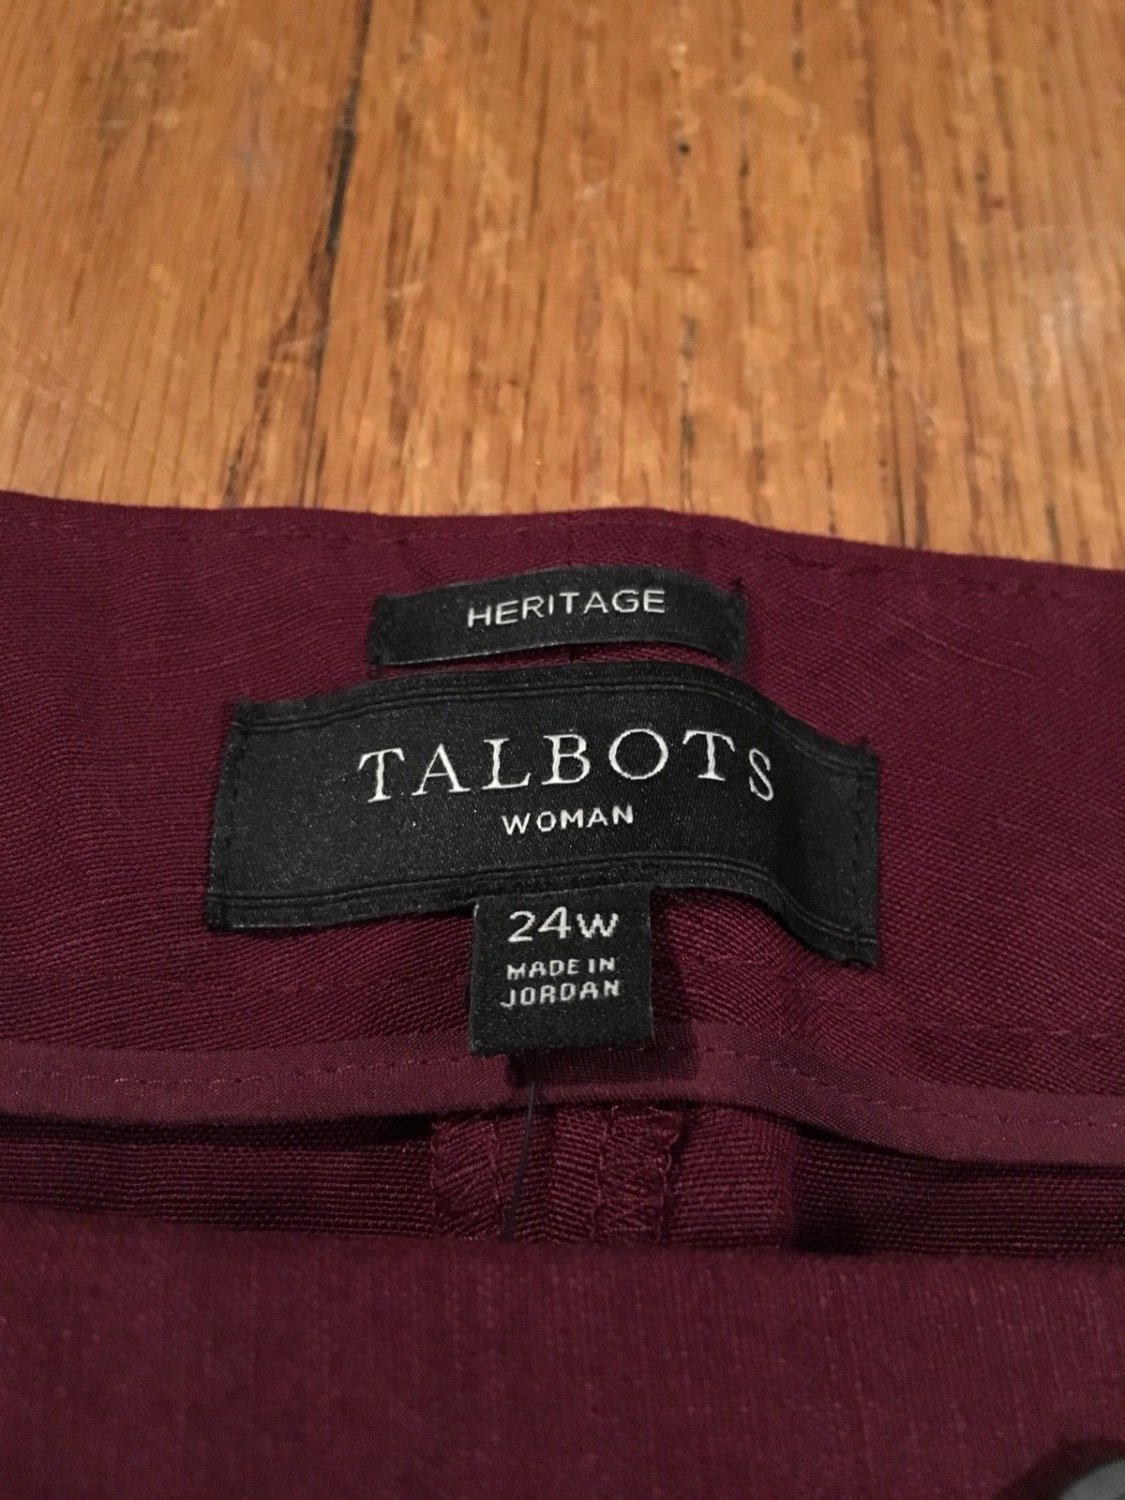 NWT Talbots Heritage Womens Burgundy Designer Pants Plus Size 24W